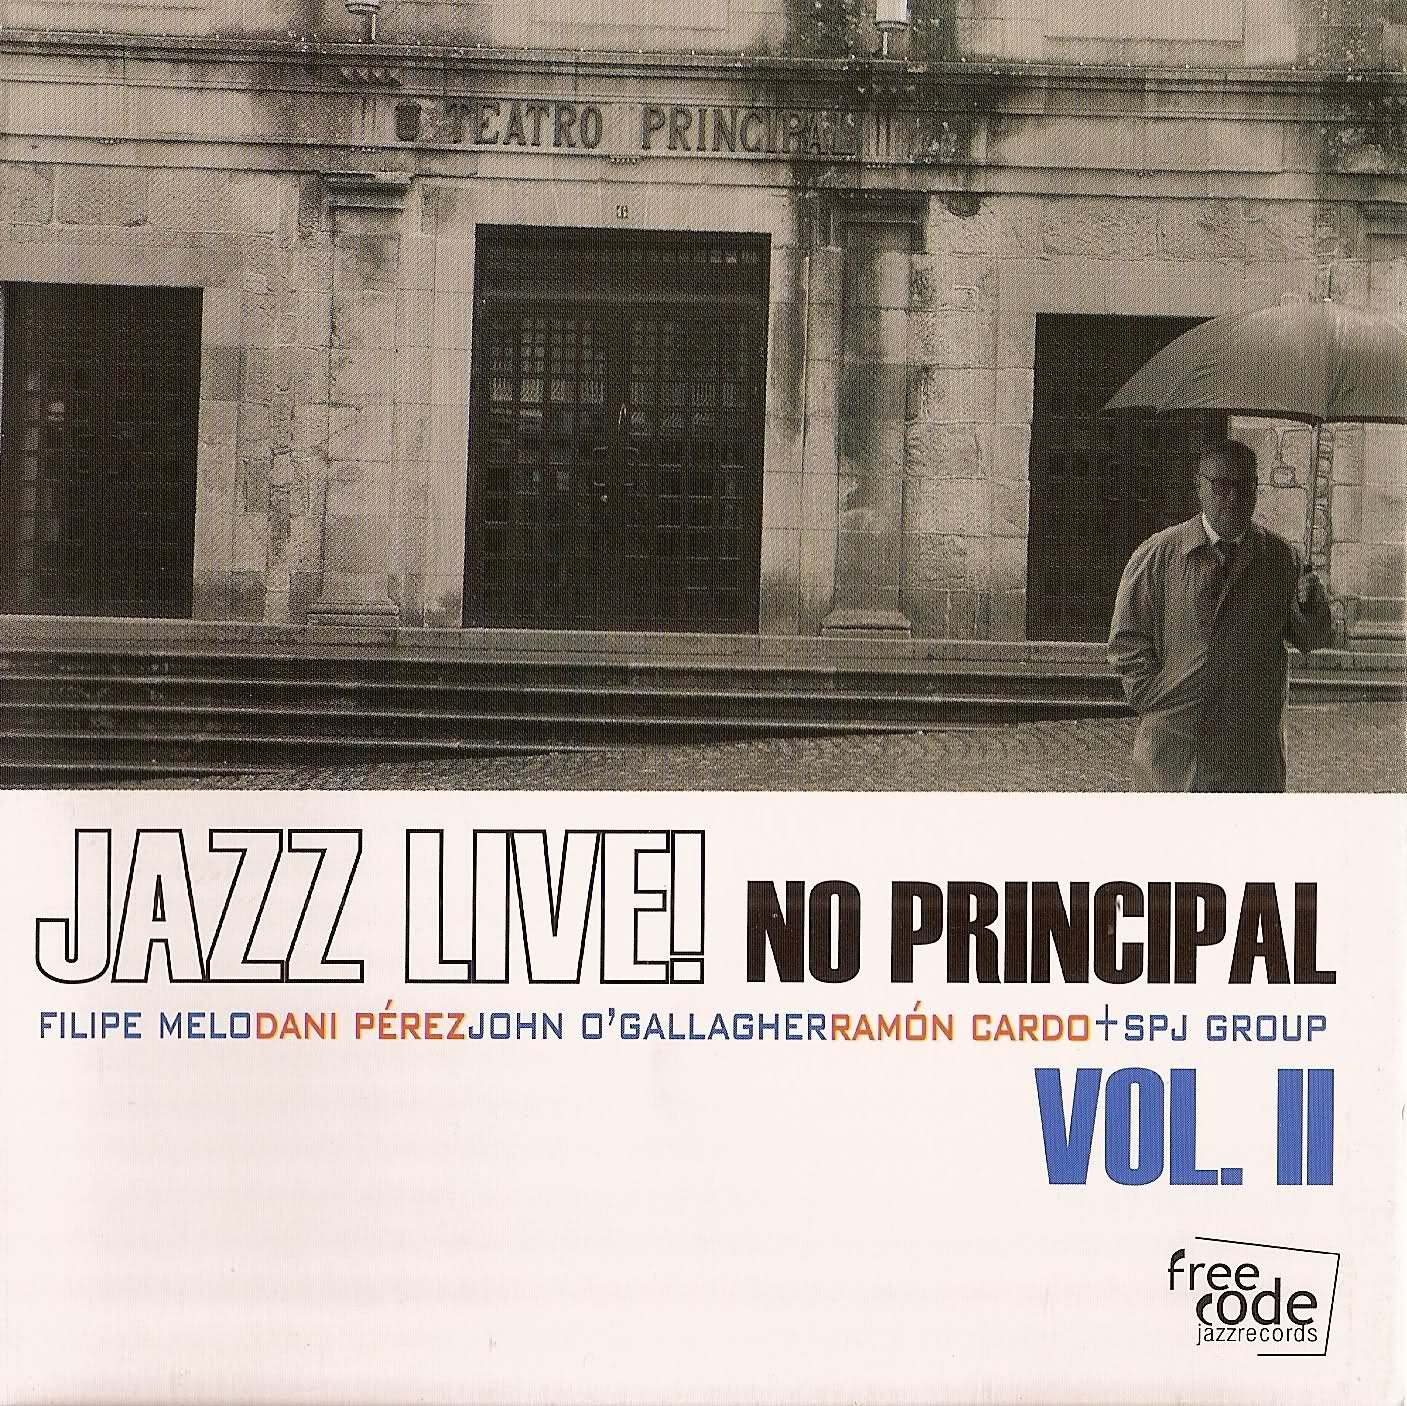 FILIPE MELO - Jazz Live No Principal Vol II cover 